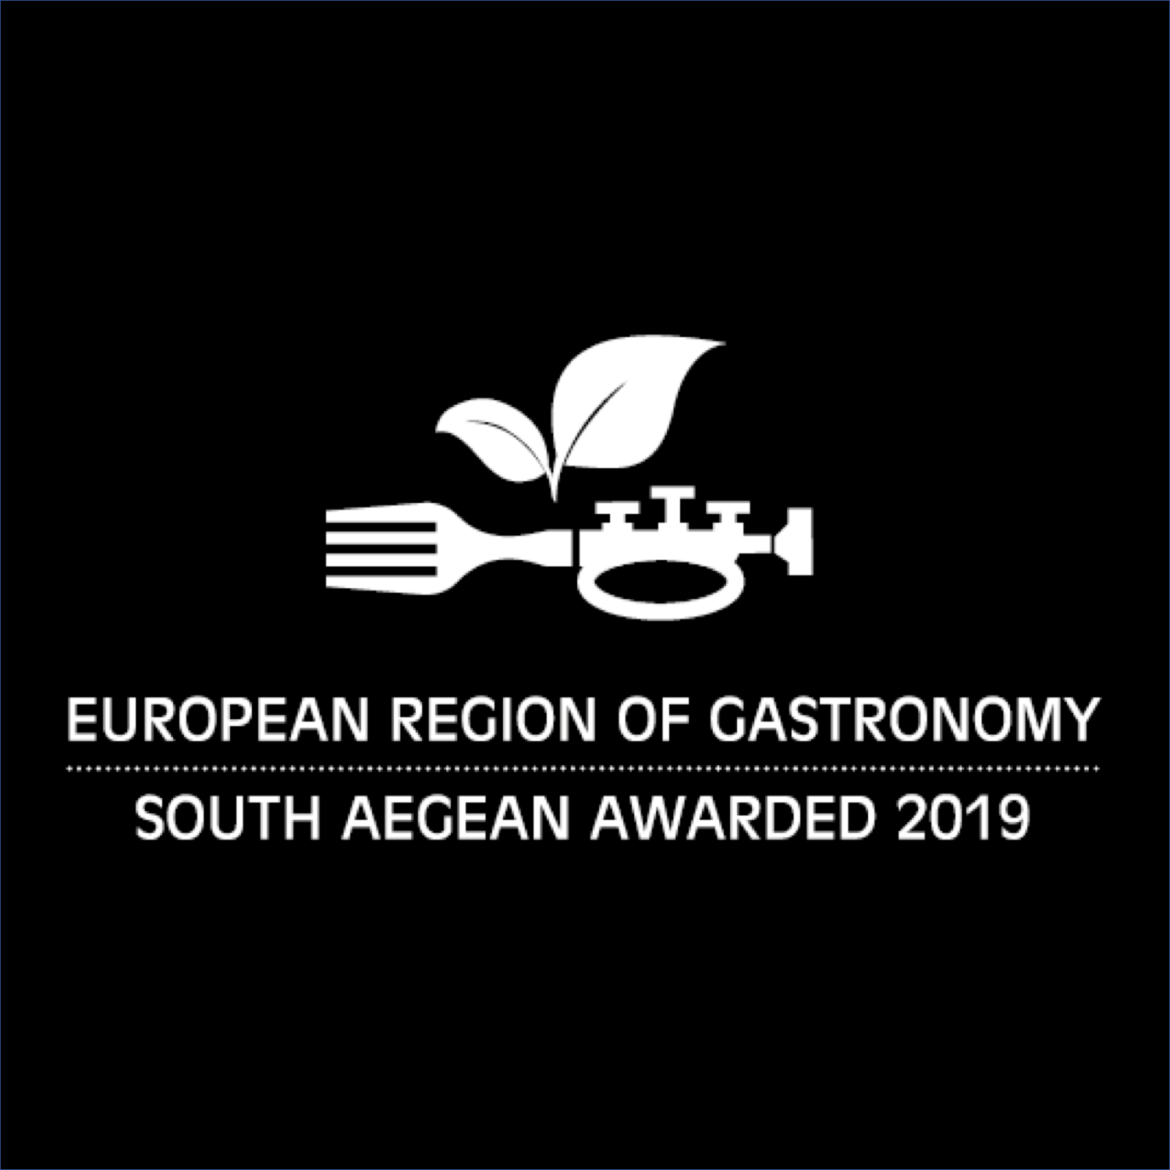 South-Aegean-European-Region-of-Gastronomy-2019_Logo_Square_WB.png